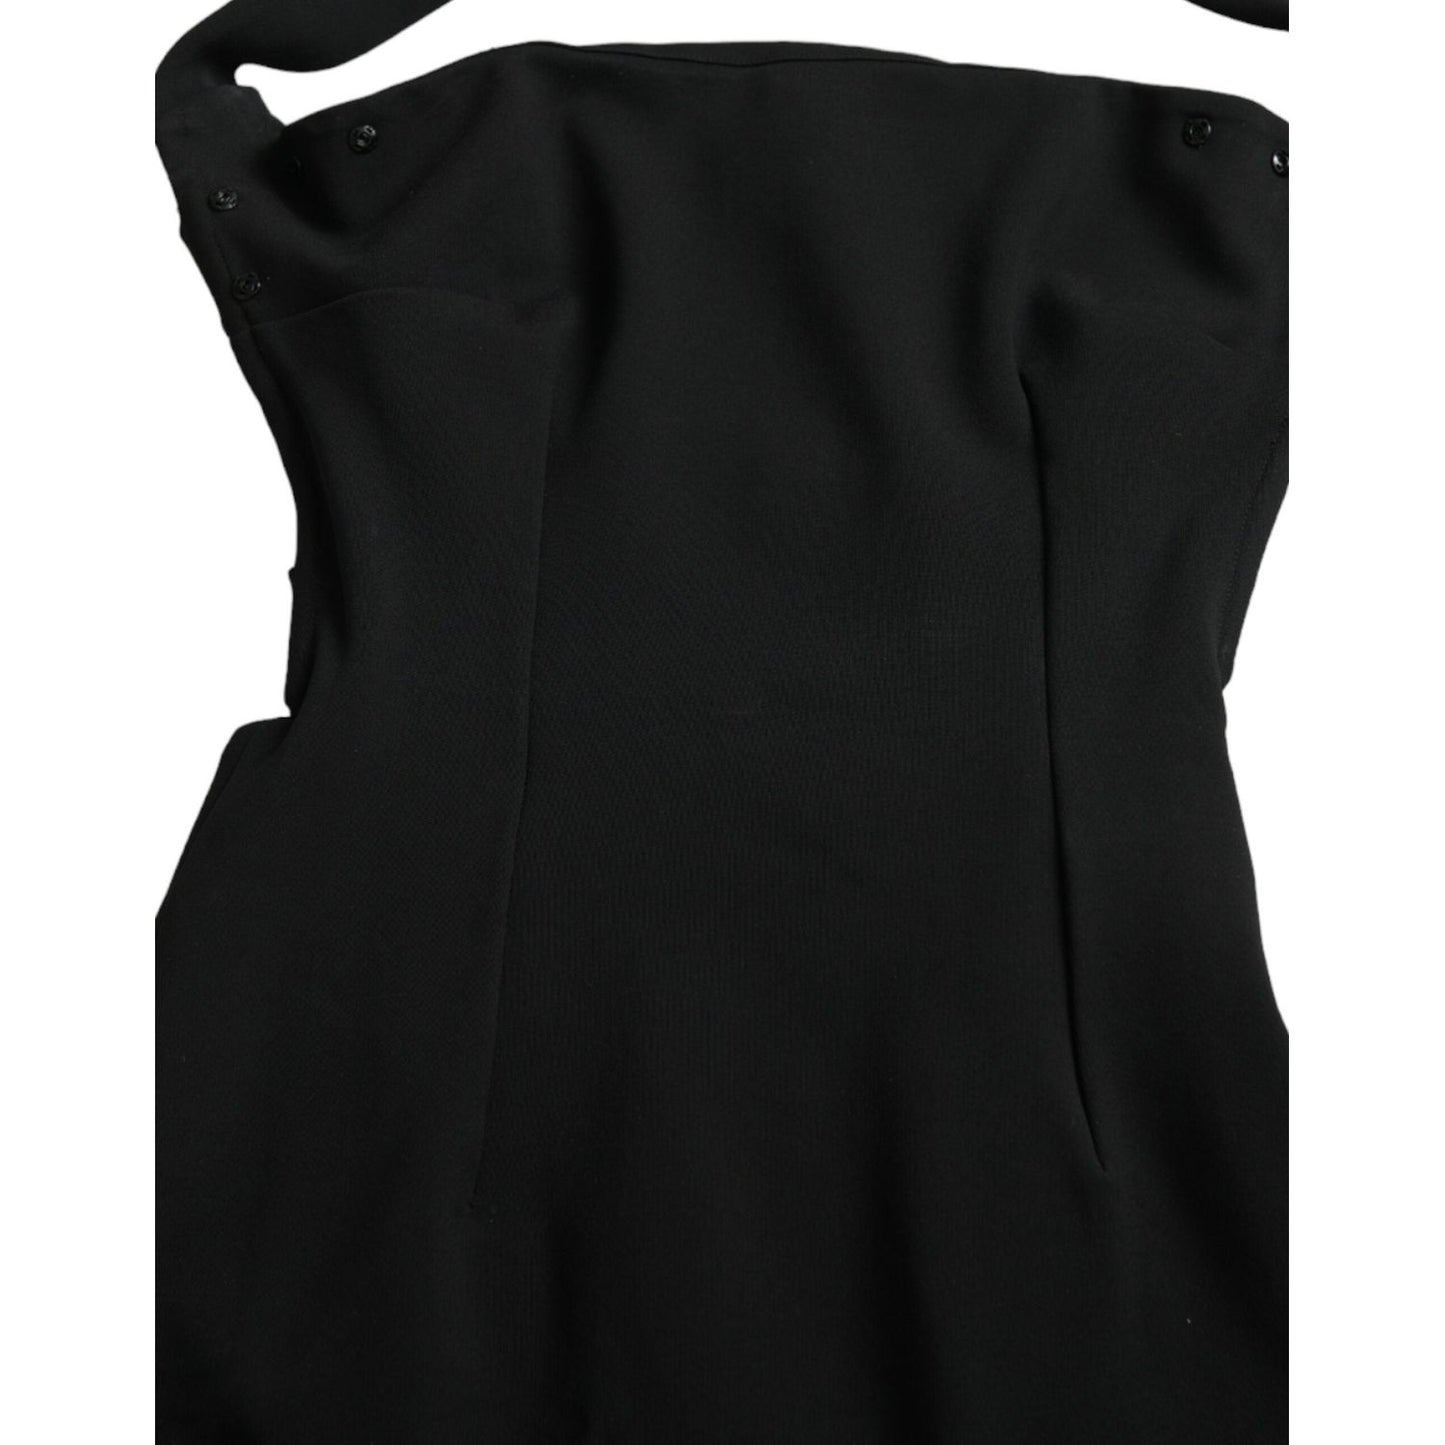 Dolce & Gabbana Elegant Black Sheath Halter Midi Dress elegant-black-sheath-halter-midi-dress